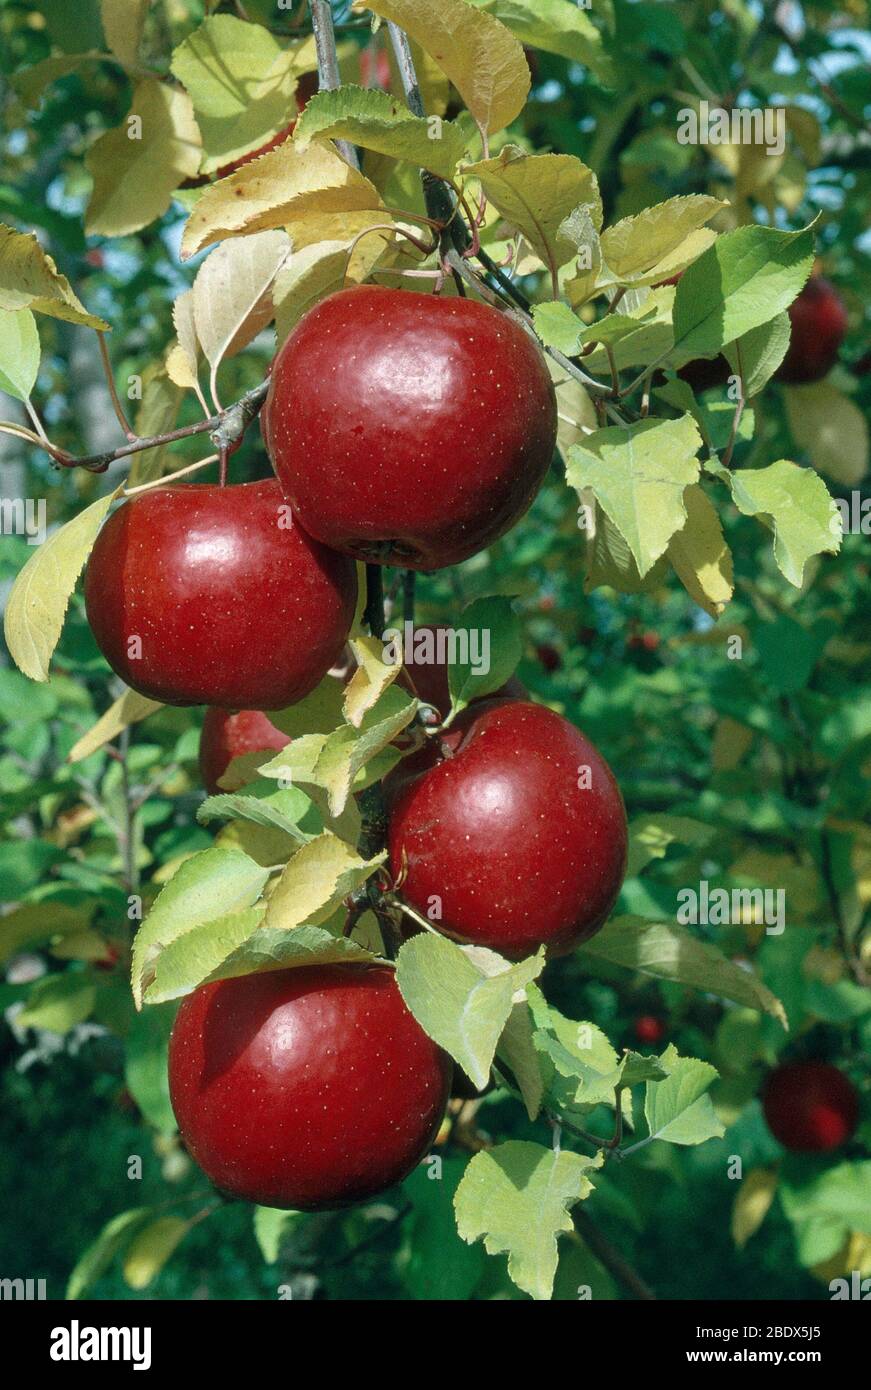 Rome Beauty Apples Stock Photo